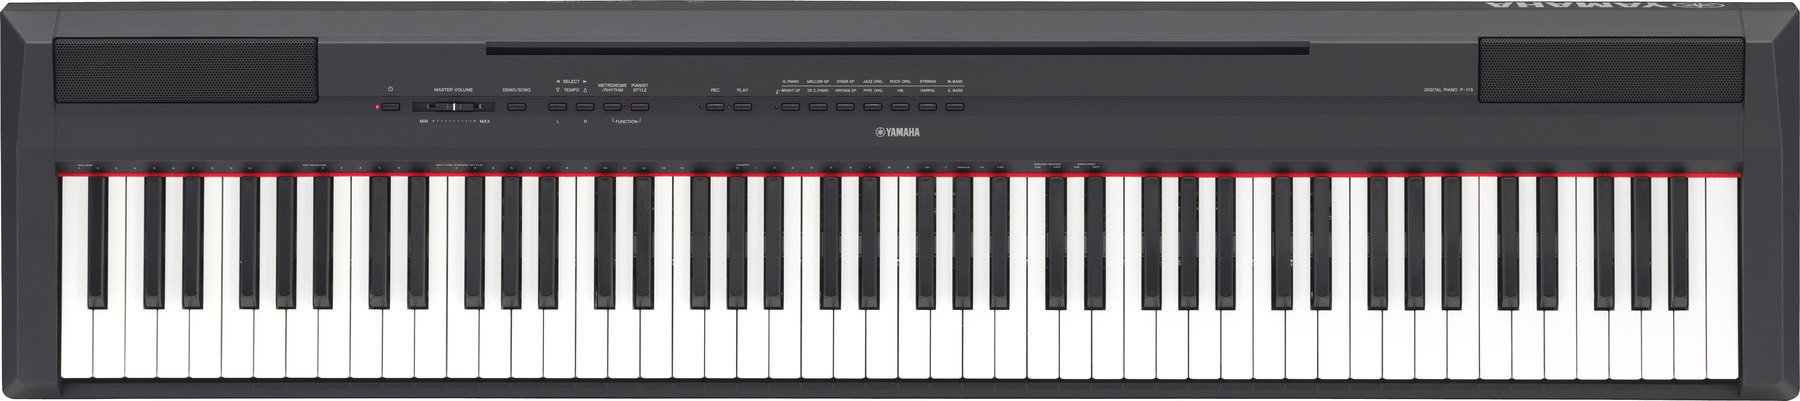 Digitralni koncertni pianino Yamaha P-115 BK